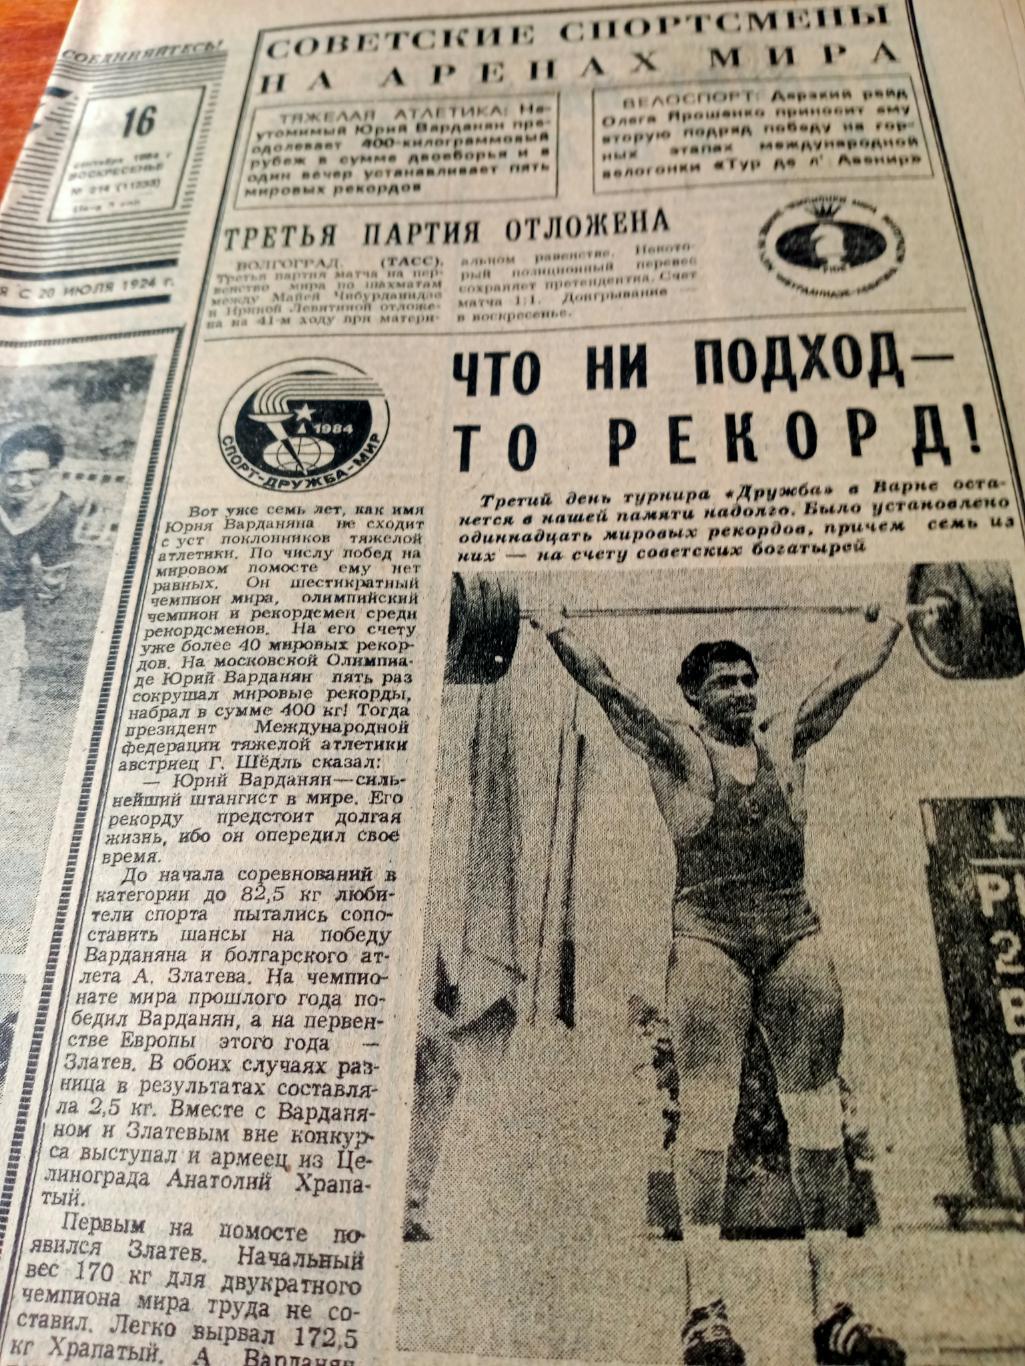 Советский спорт. 1984 год, 16 сентября - На аренах мира!